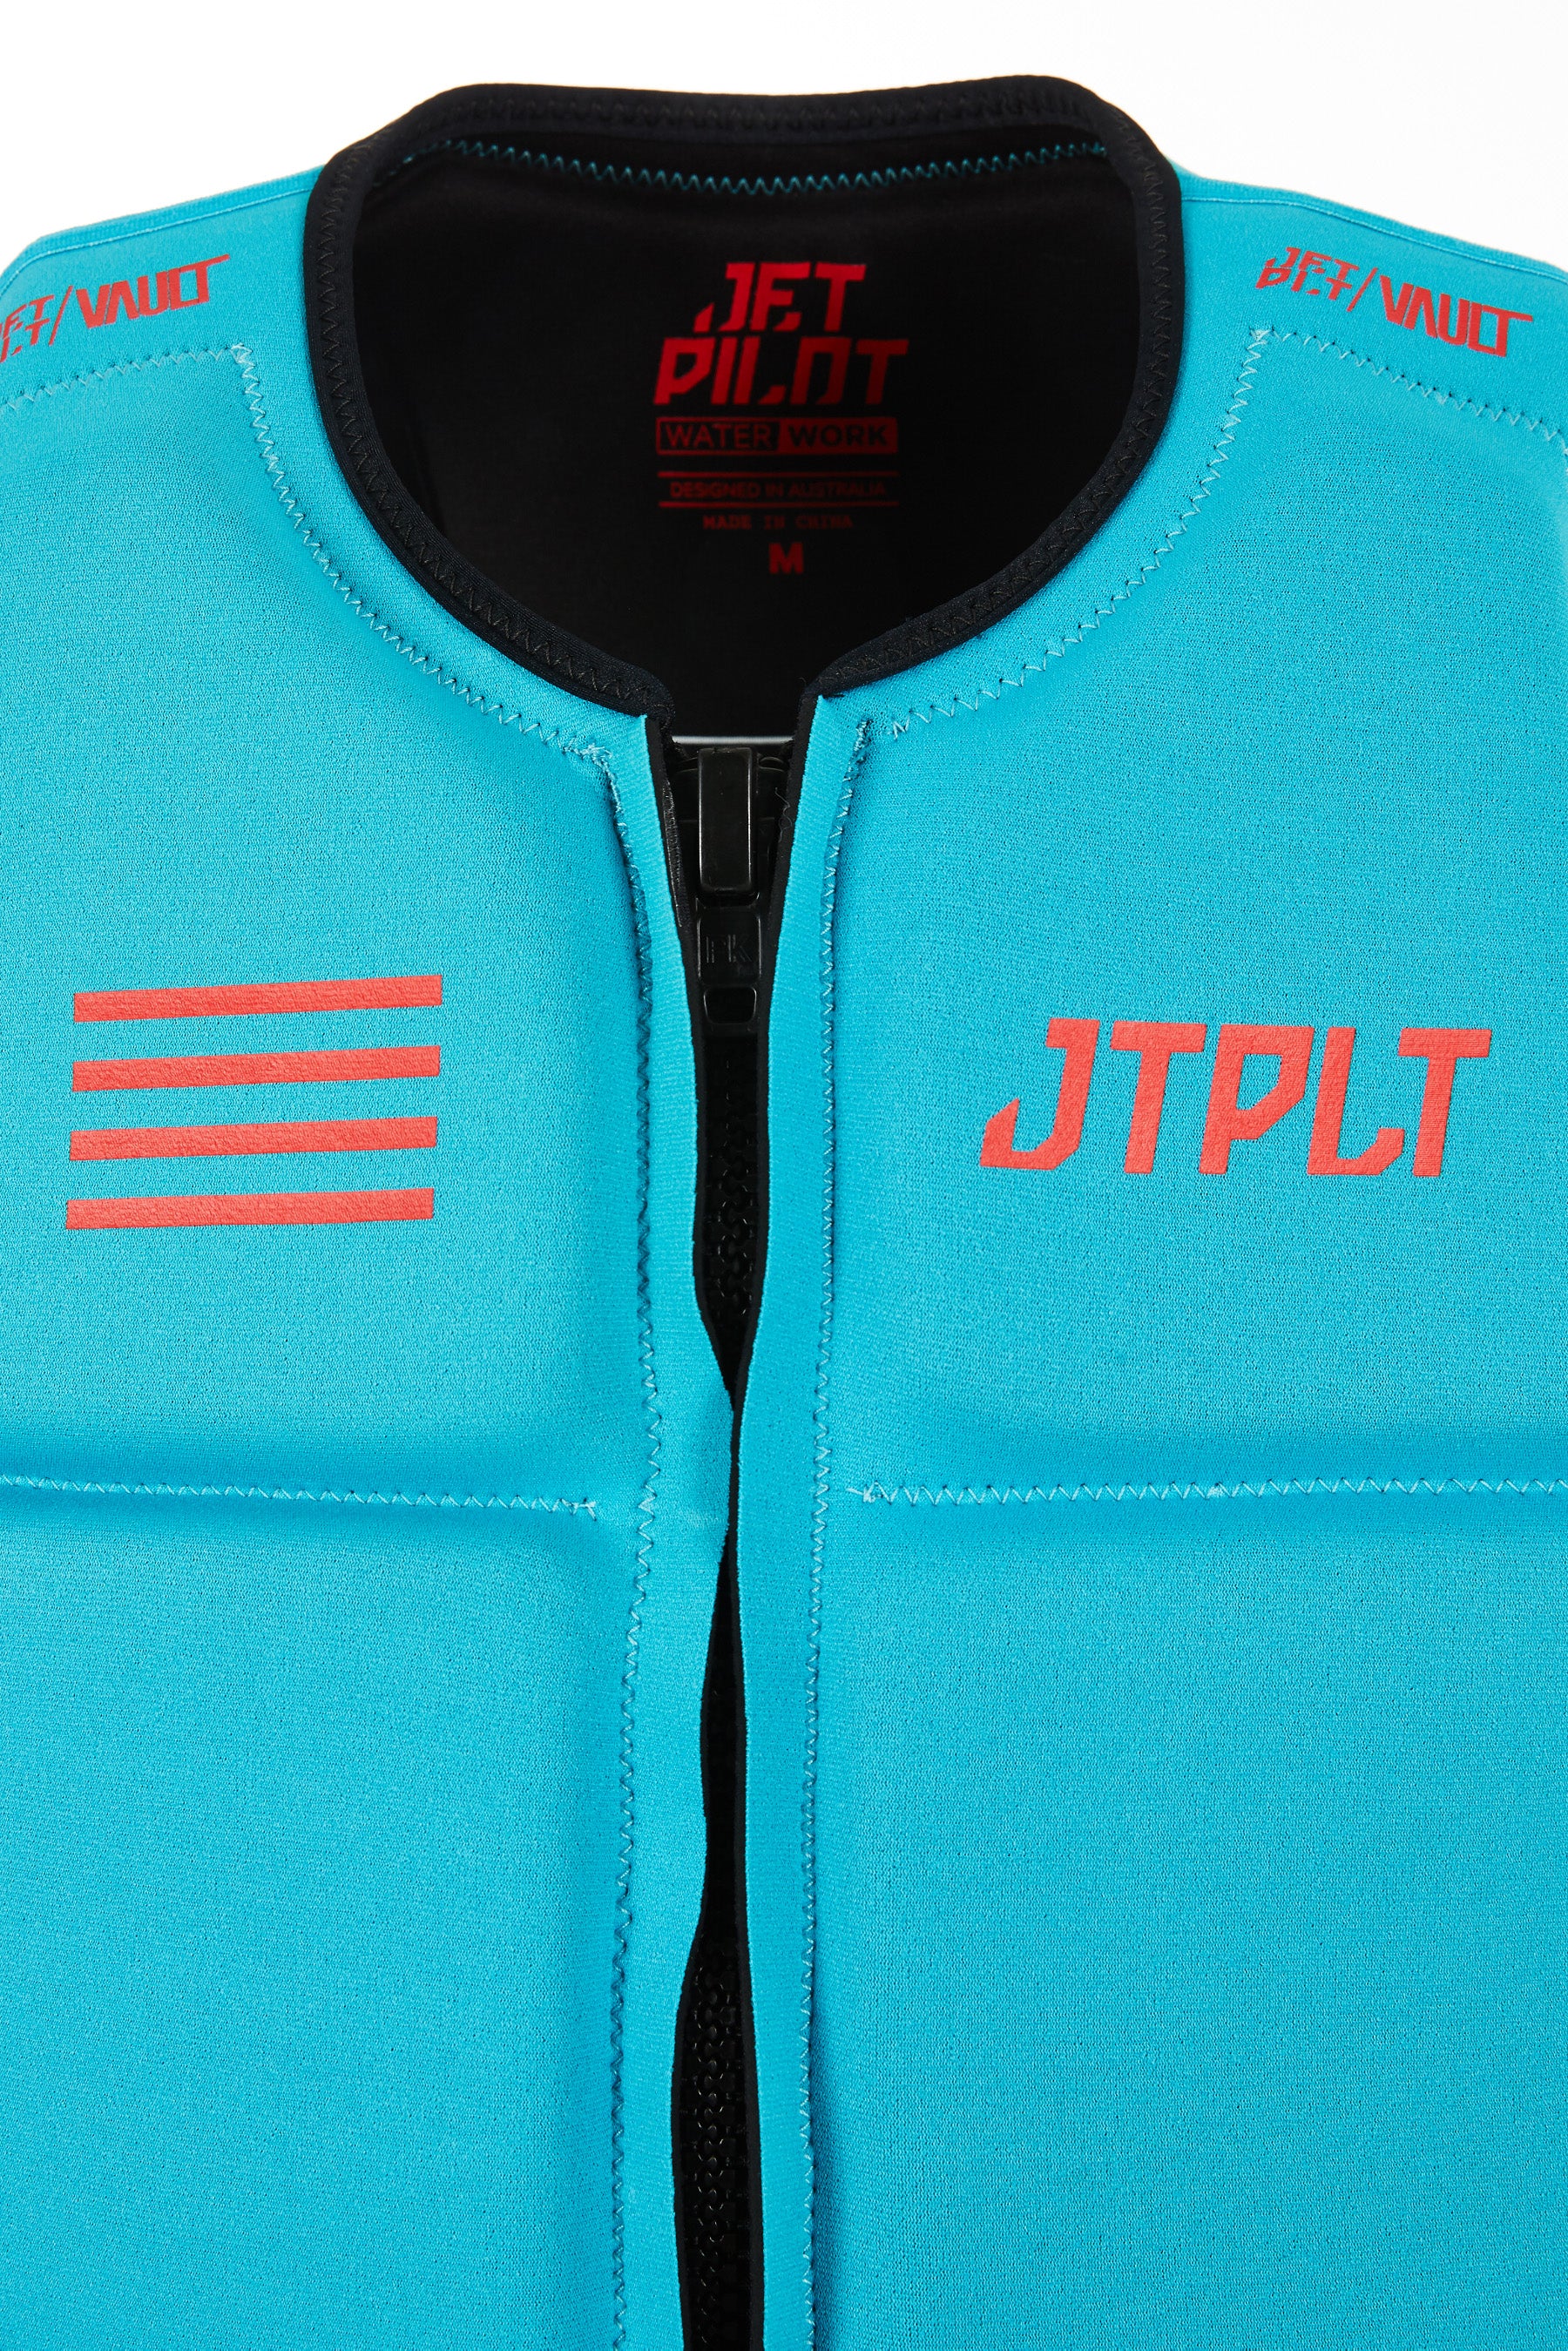 Jetpilot Rx Vault Mens Life Jacket - Blue 3